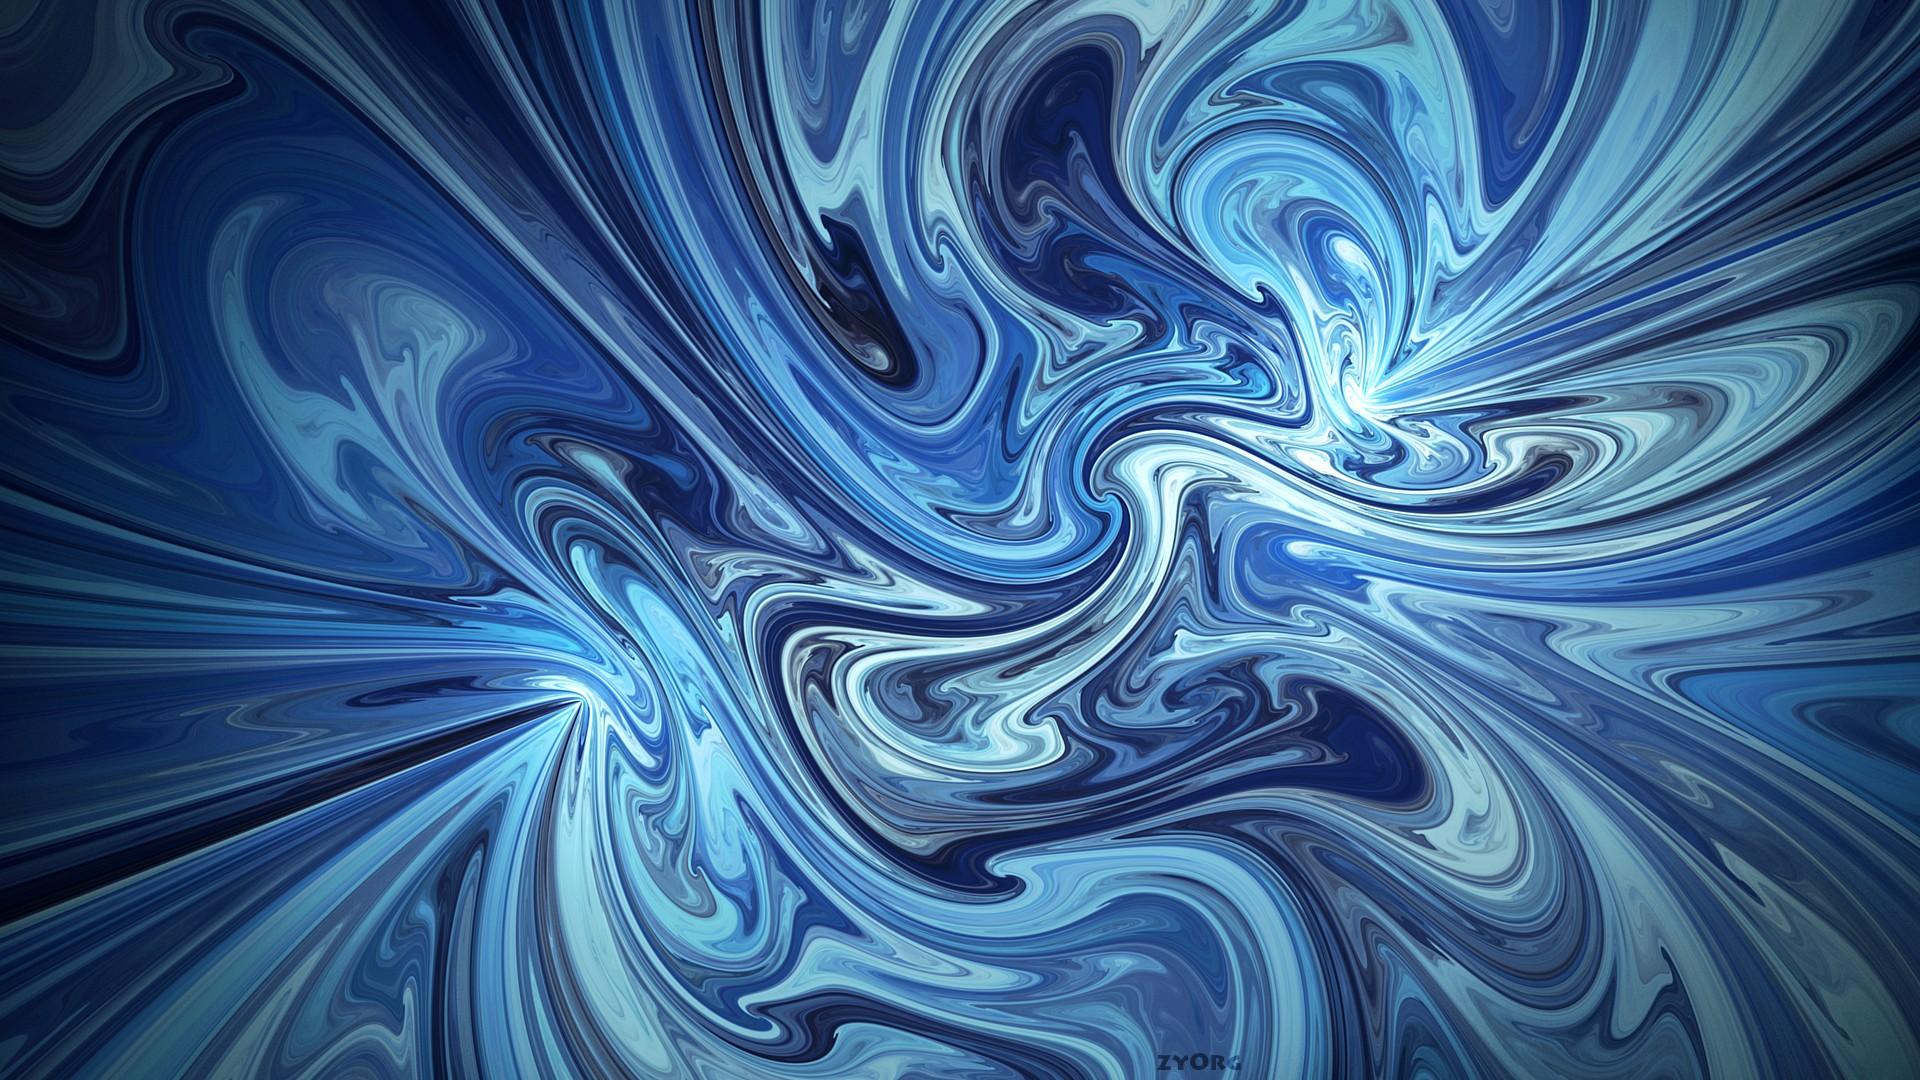 Whirlwind abstract backgrounds blue digital art wallpaper 62256